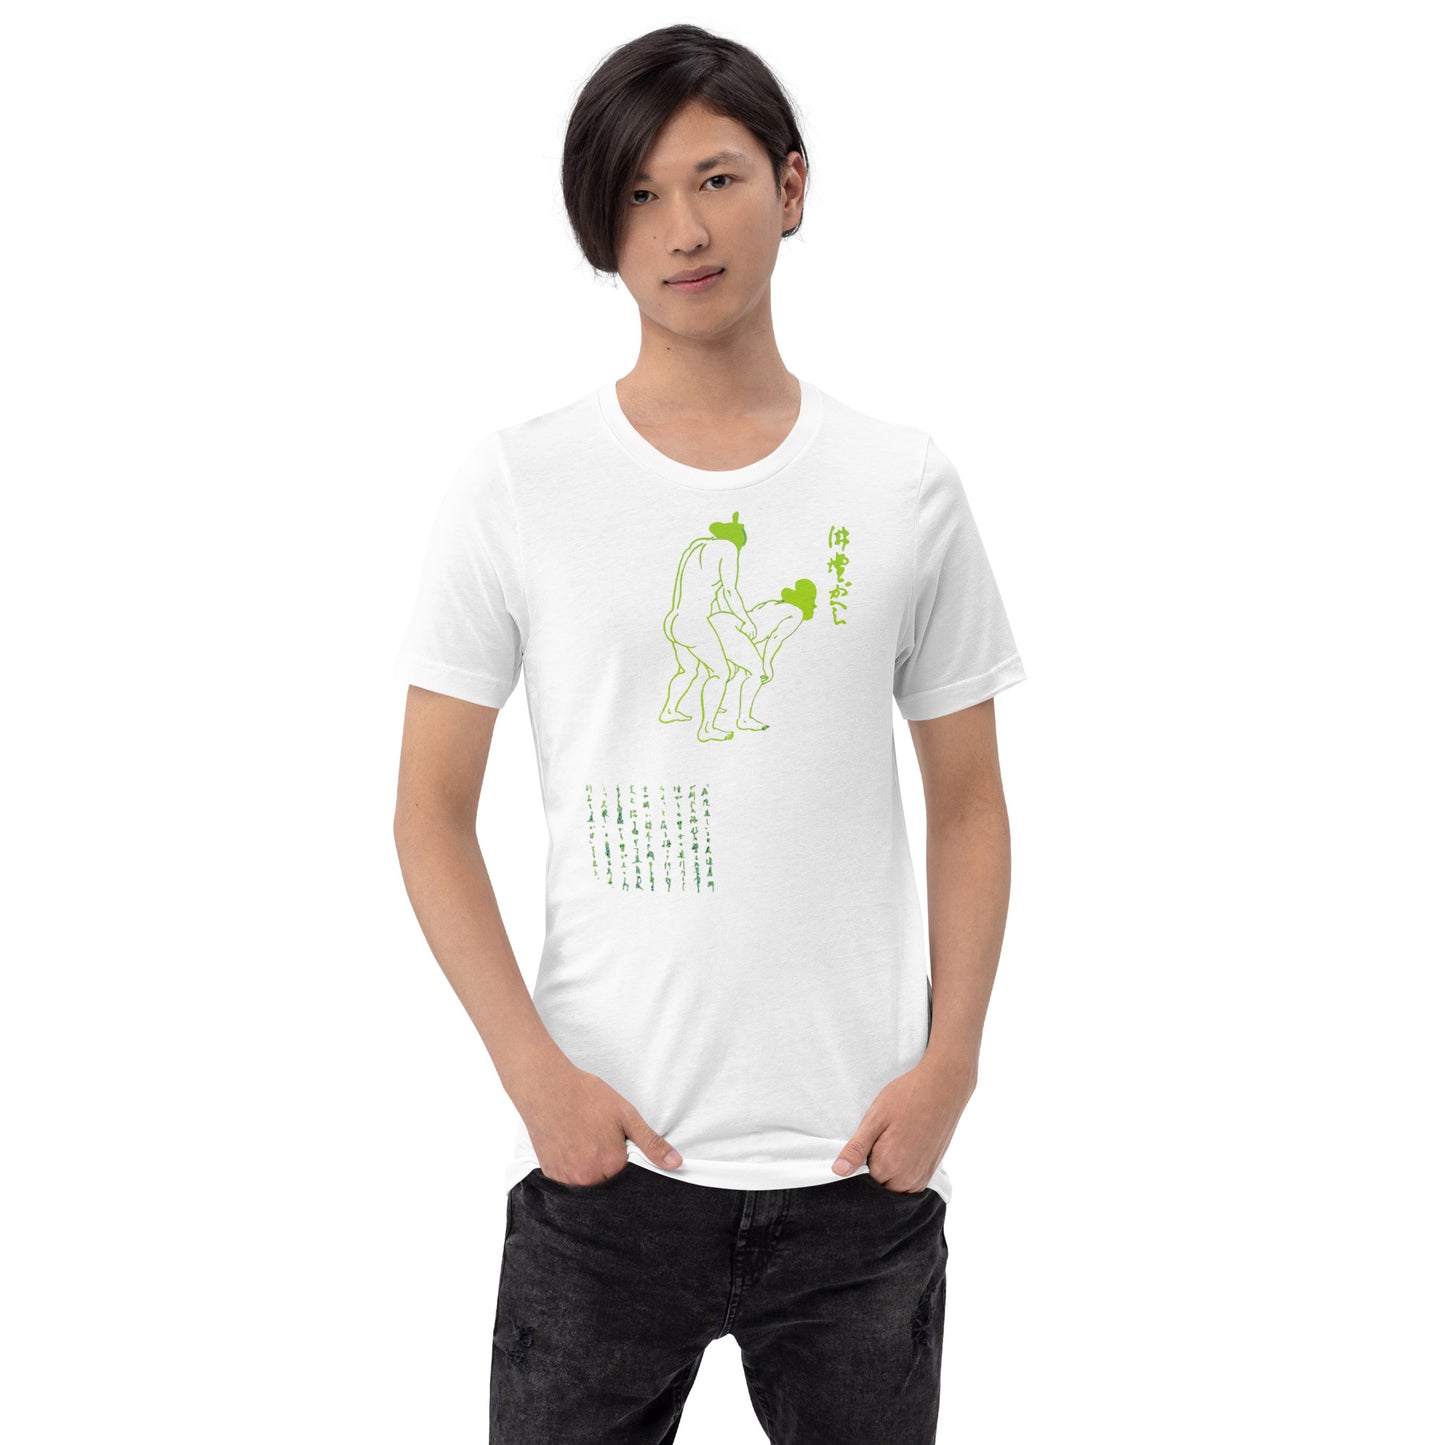 Unisex t-shirt "39 BUTSUDAN GAESHI" White